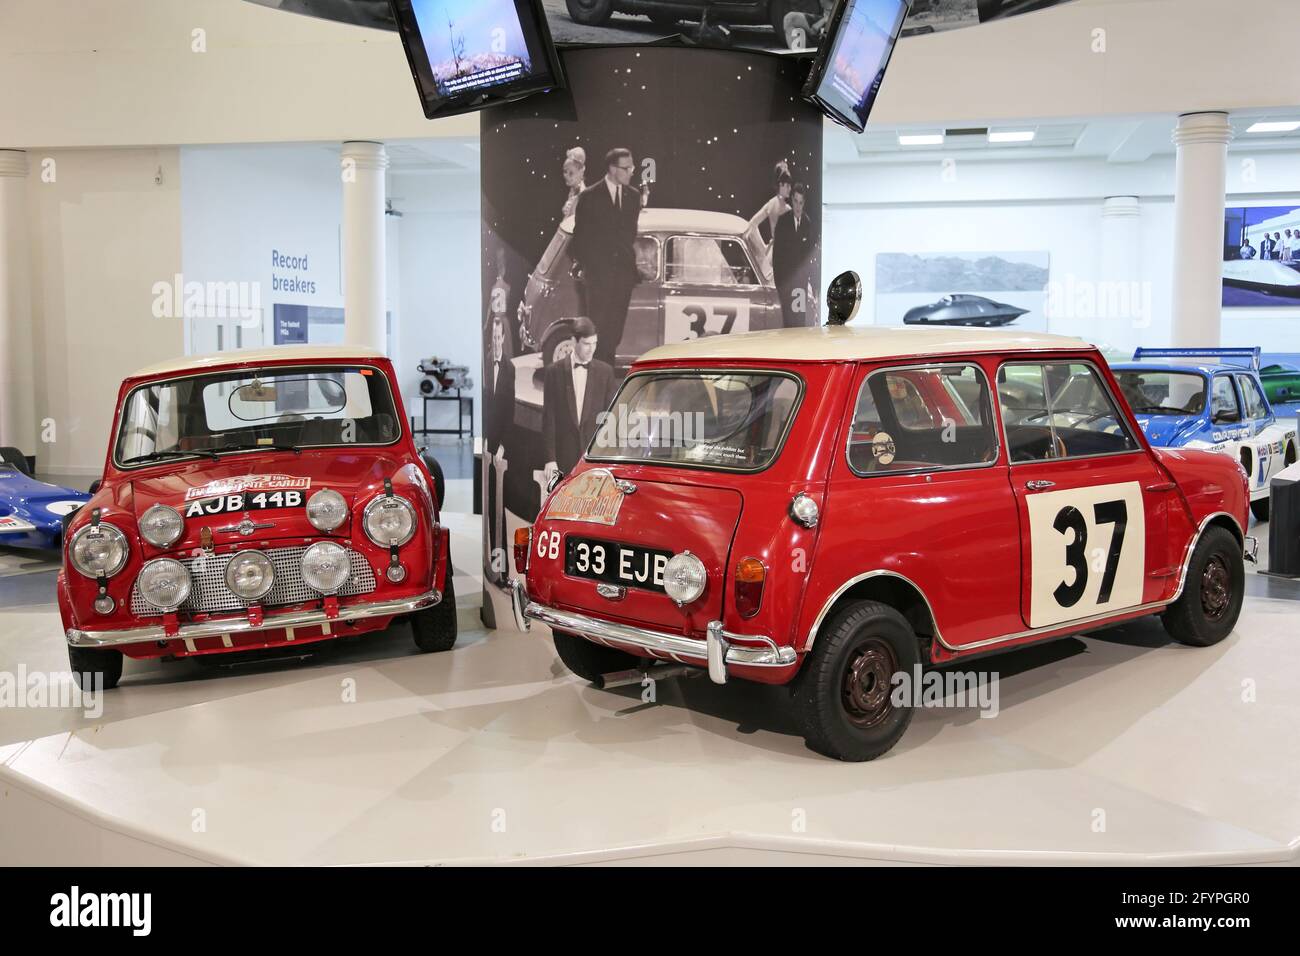 Morris Mini-Cooper S (1964 et 1963), tous deux gagnants du rallye Monte Carlo, British Motor Museum, Gaydon, Warwick, West Midlands, Angleterre, Royaume-Uni, Europe Banque D'Images